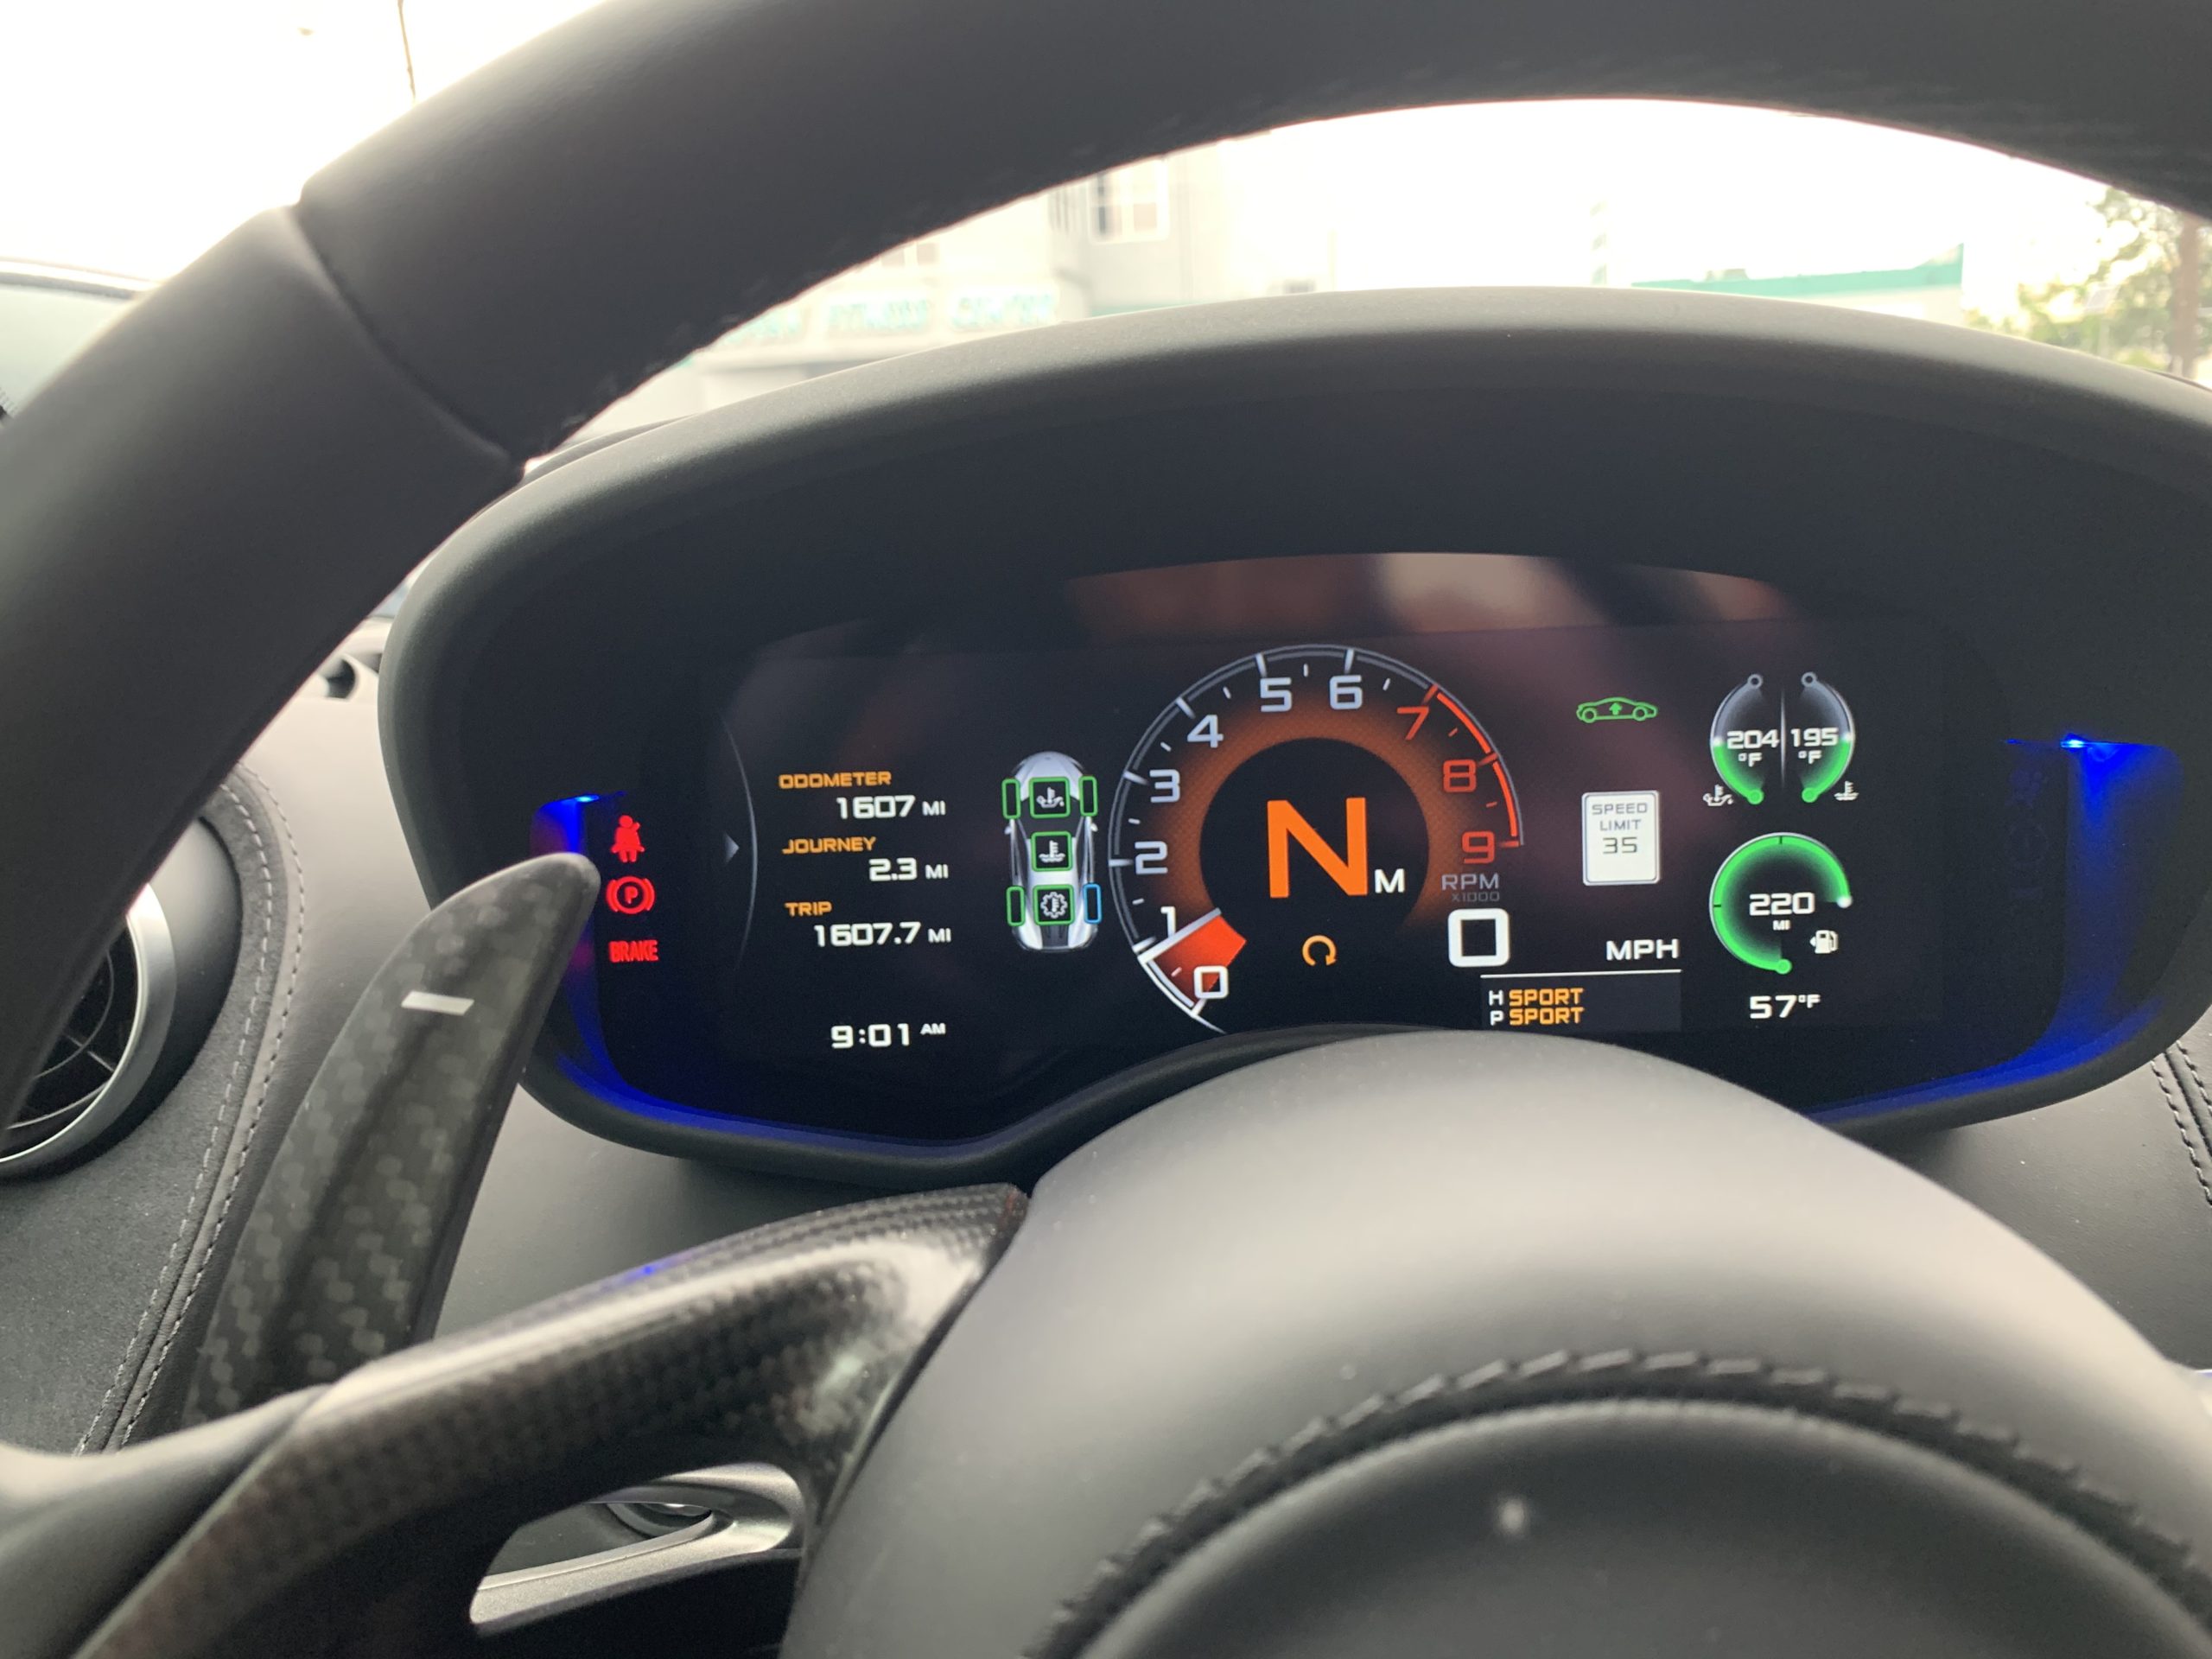 k40 radar detector alert leds on a 2019 McLaren